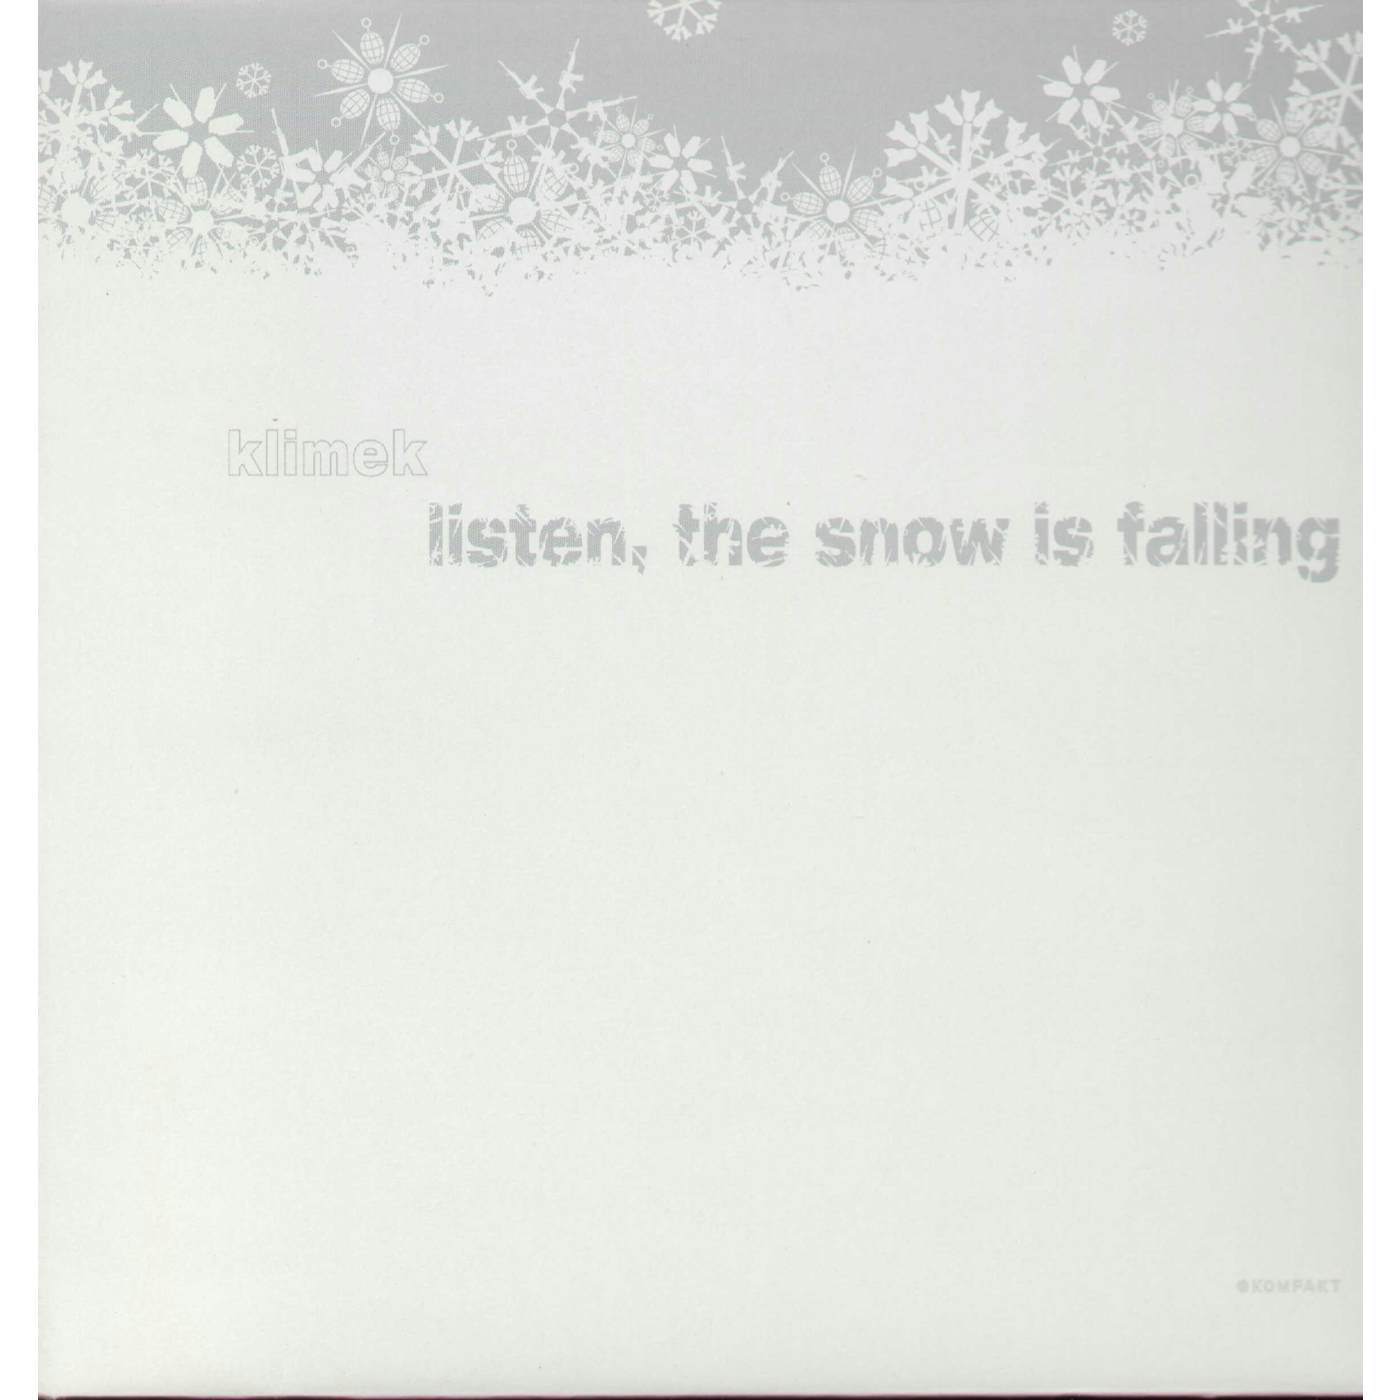 Klimek Listen The Snow Is Falling Vinyl Record